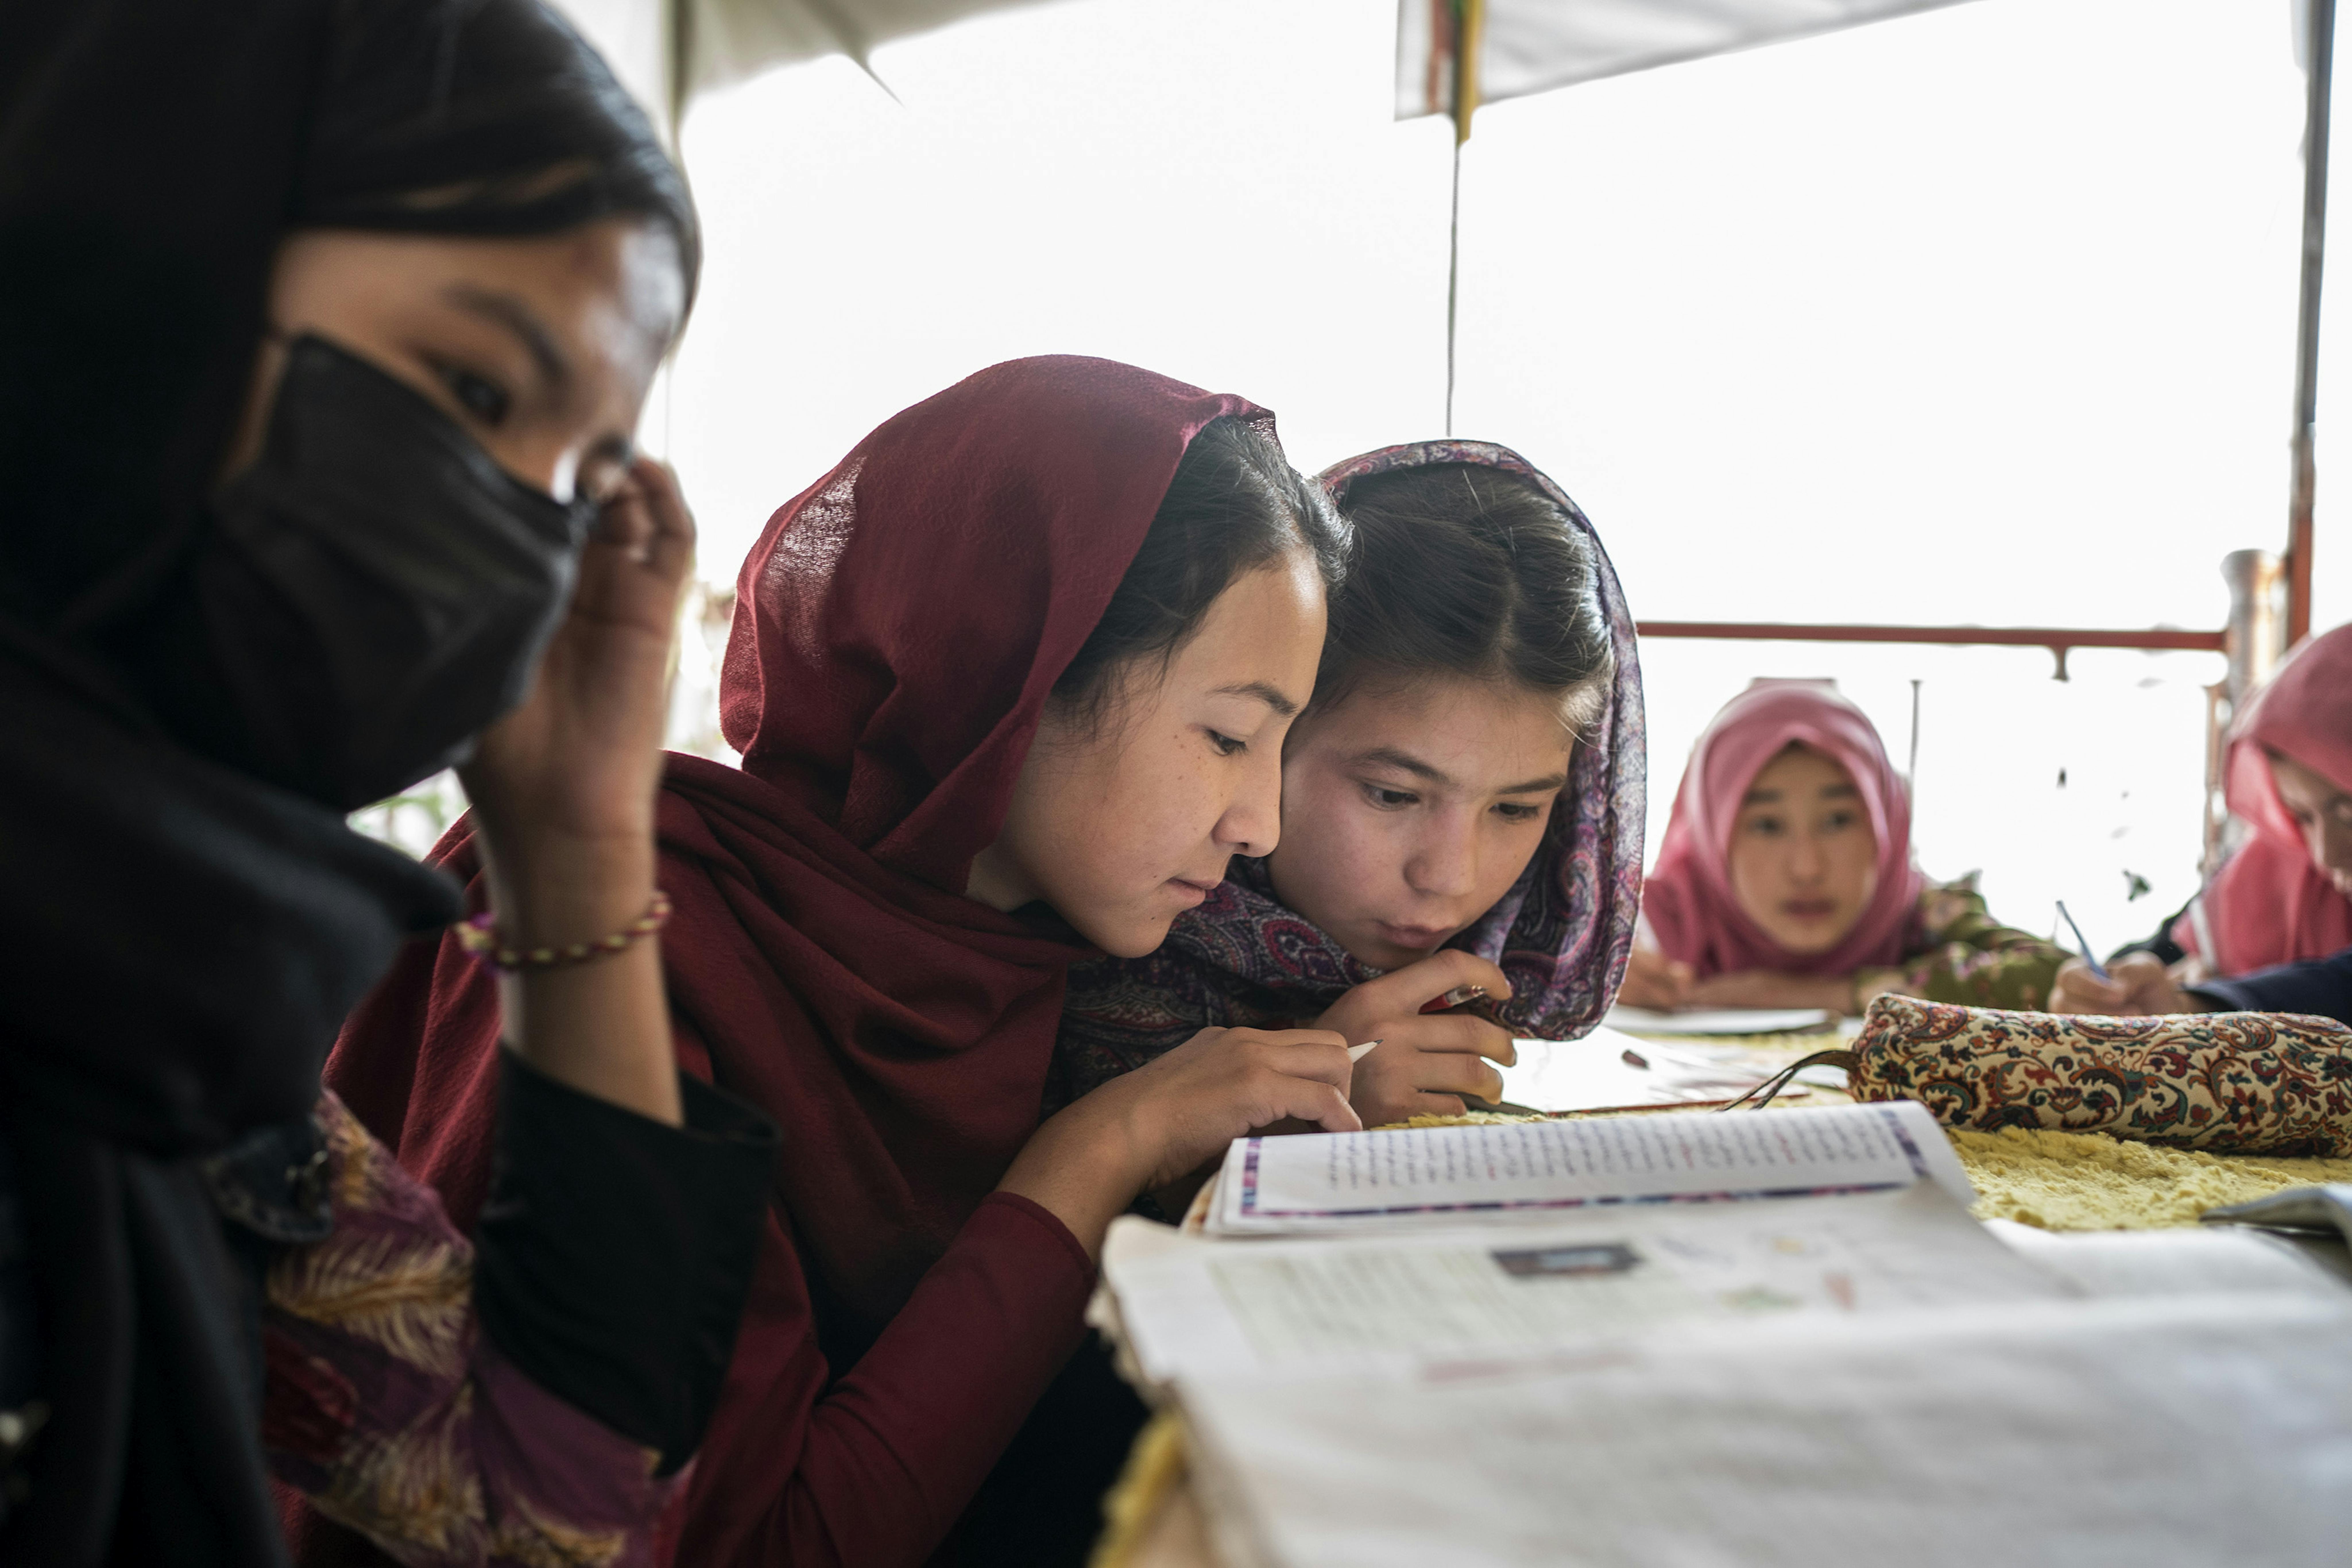 © Daniel Pilar, Germany, FAZ, Agency laif -Una scuola segreta per ragazze nella capitale afghana di Kabul